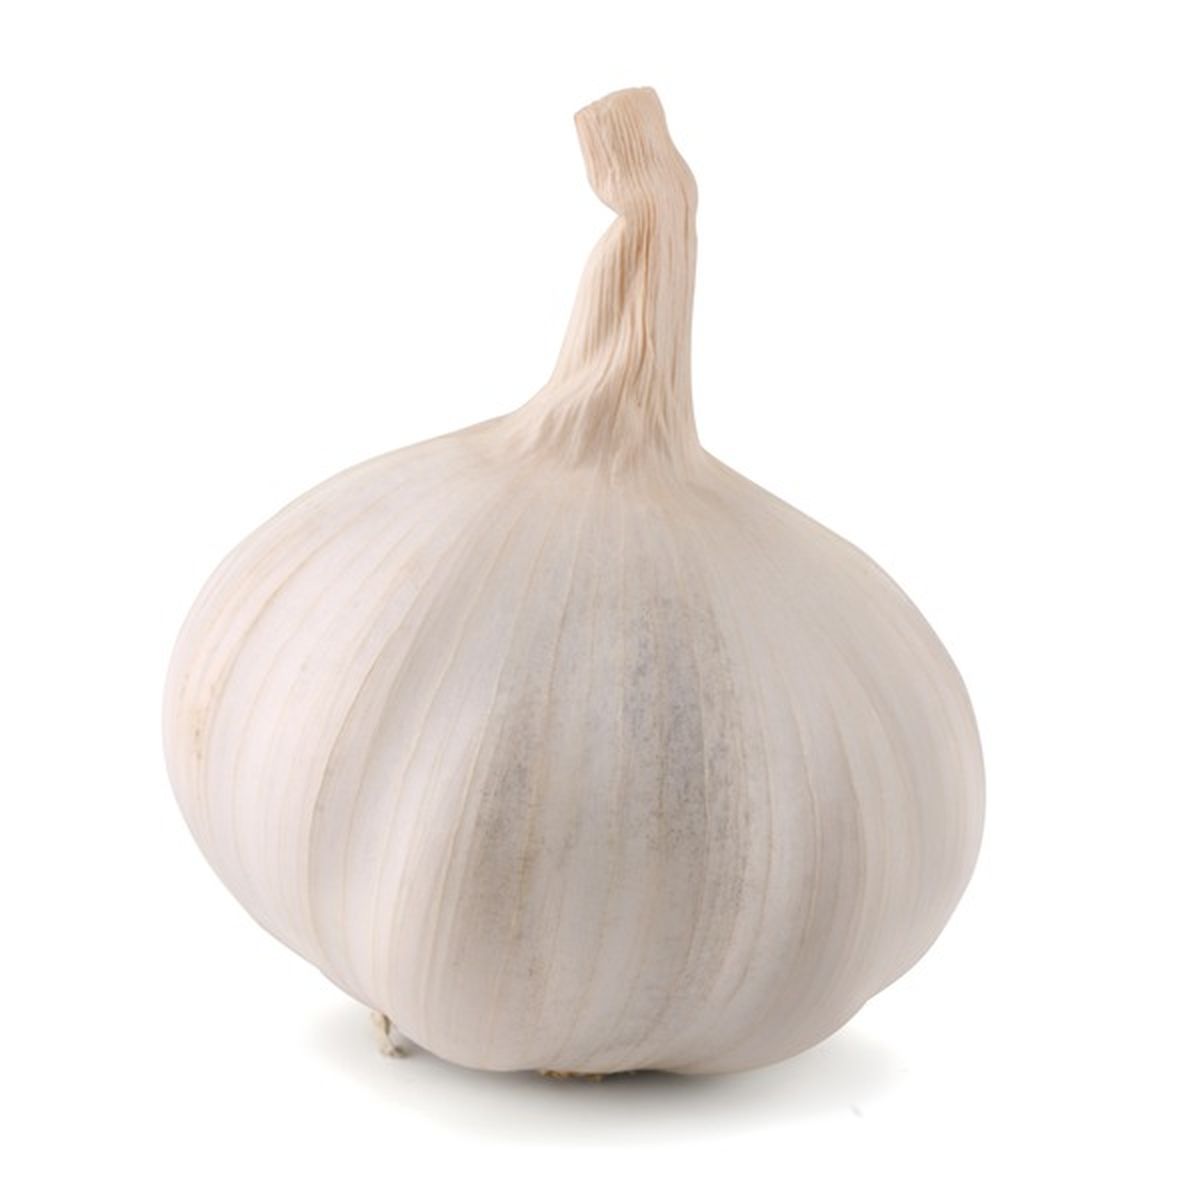 thin sliced garlic